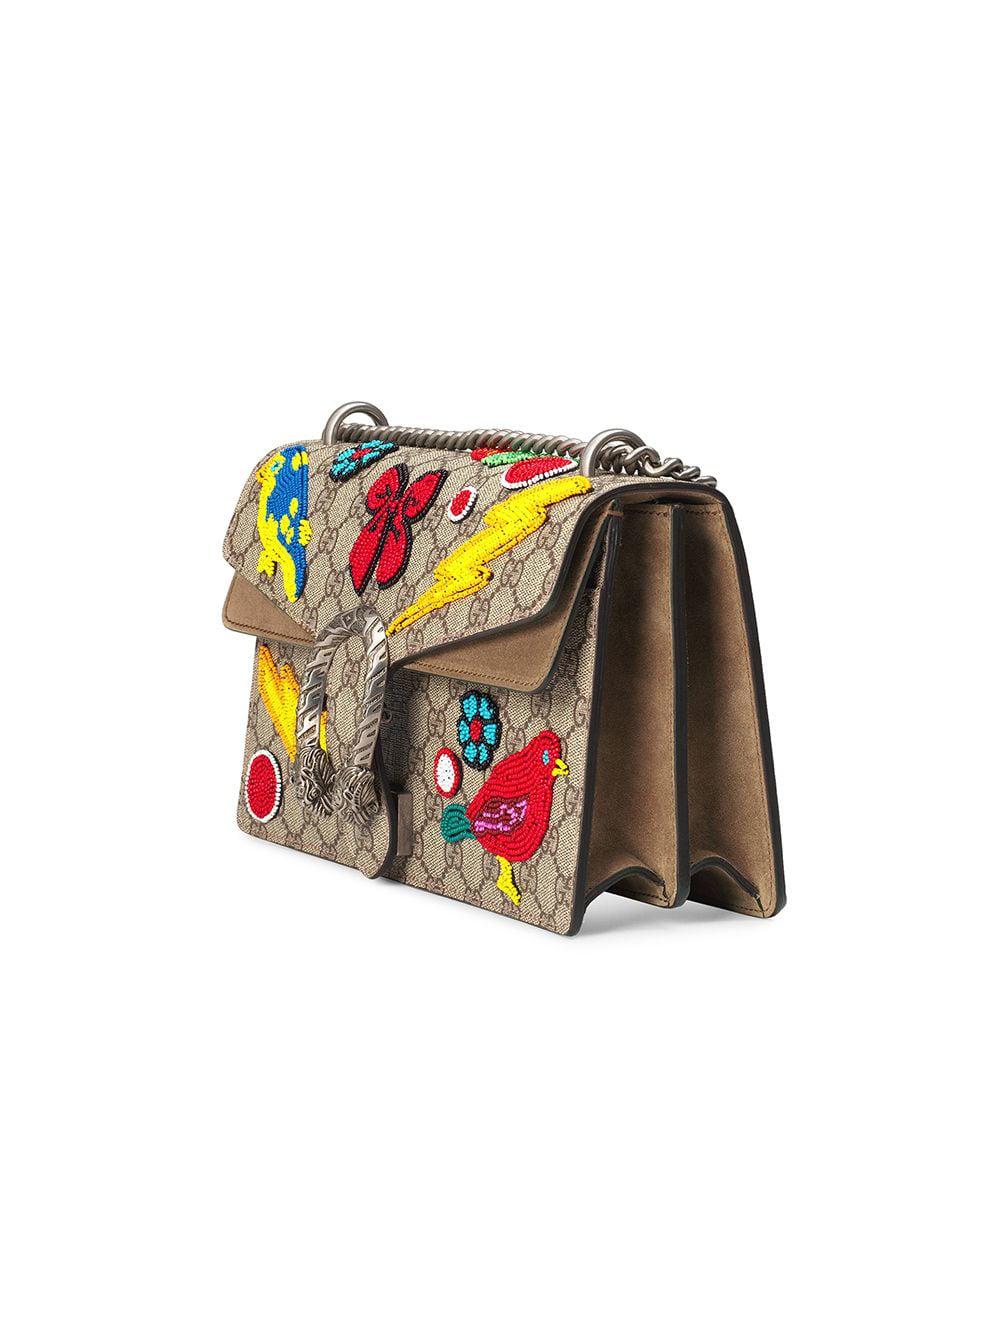 Gucci Dionysus GG Supreme Canvas Shoulder Bag in Brown - Lyst